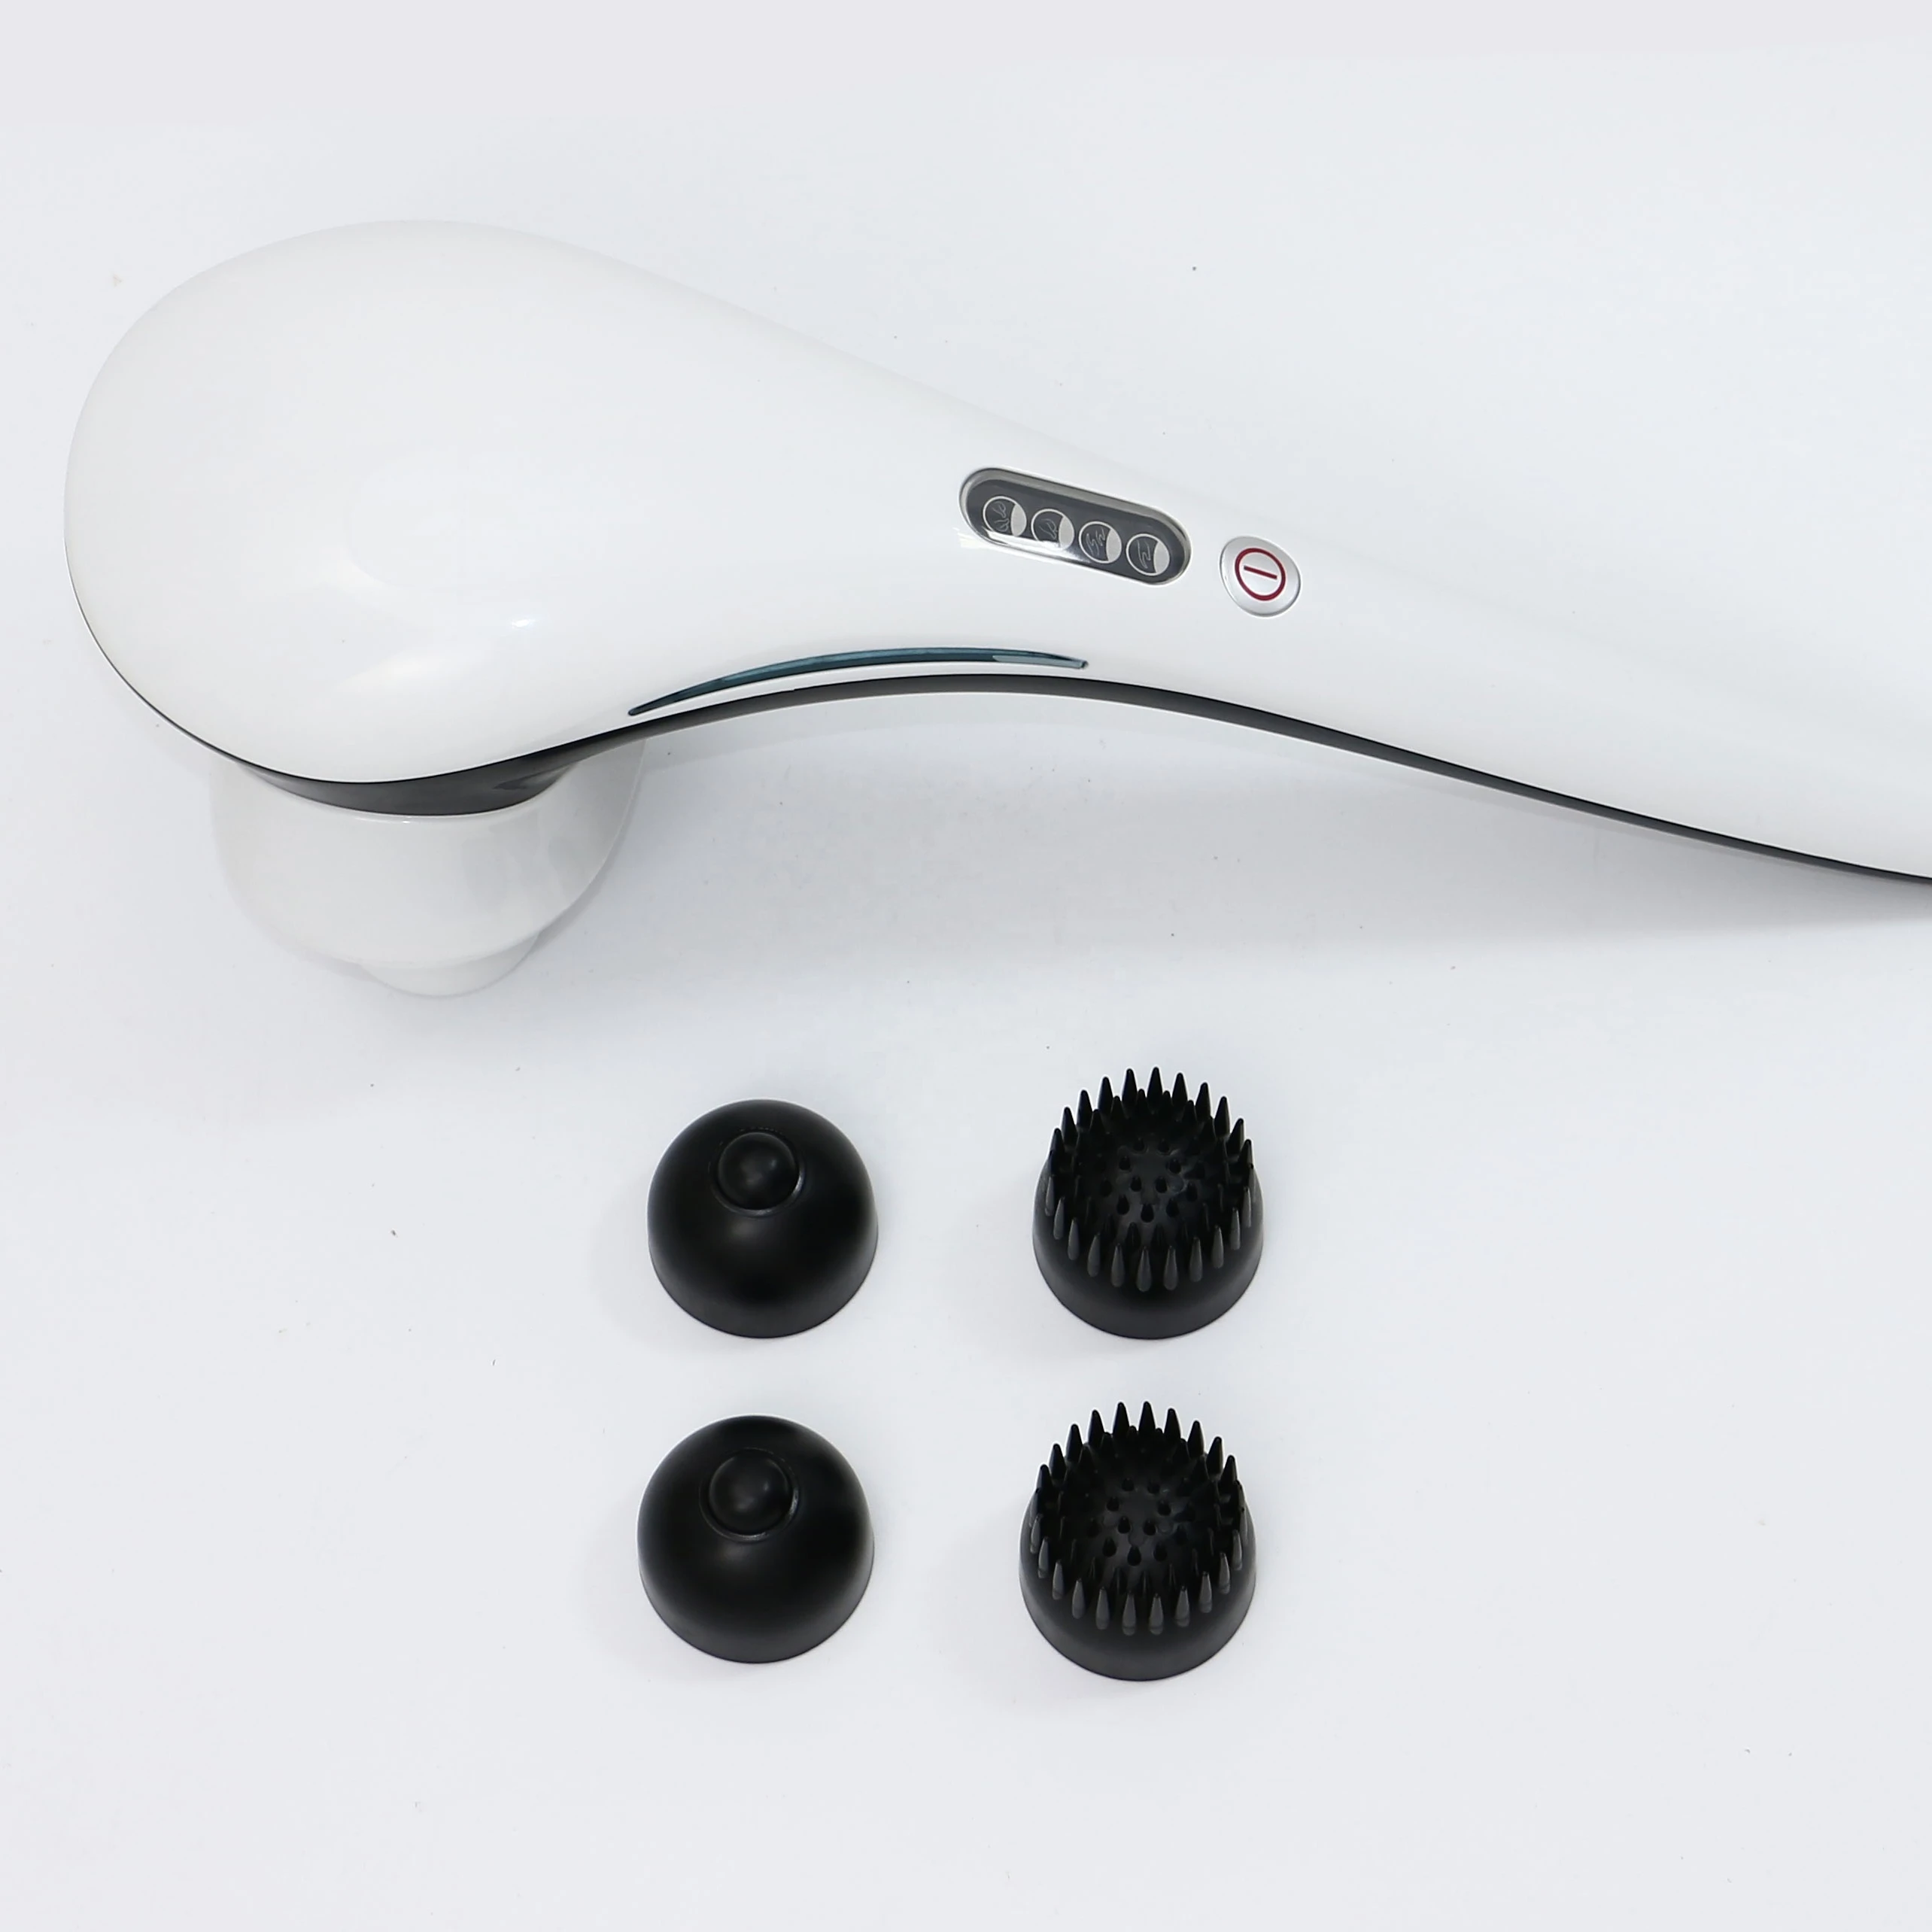 LUYAO percussion electric back massager vibrator handheld dual head body vibrating hammer massager